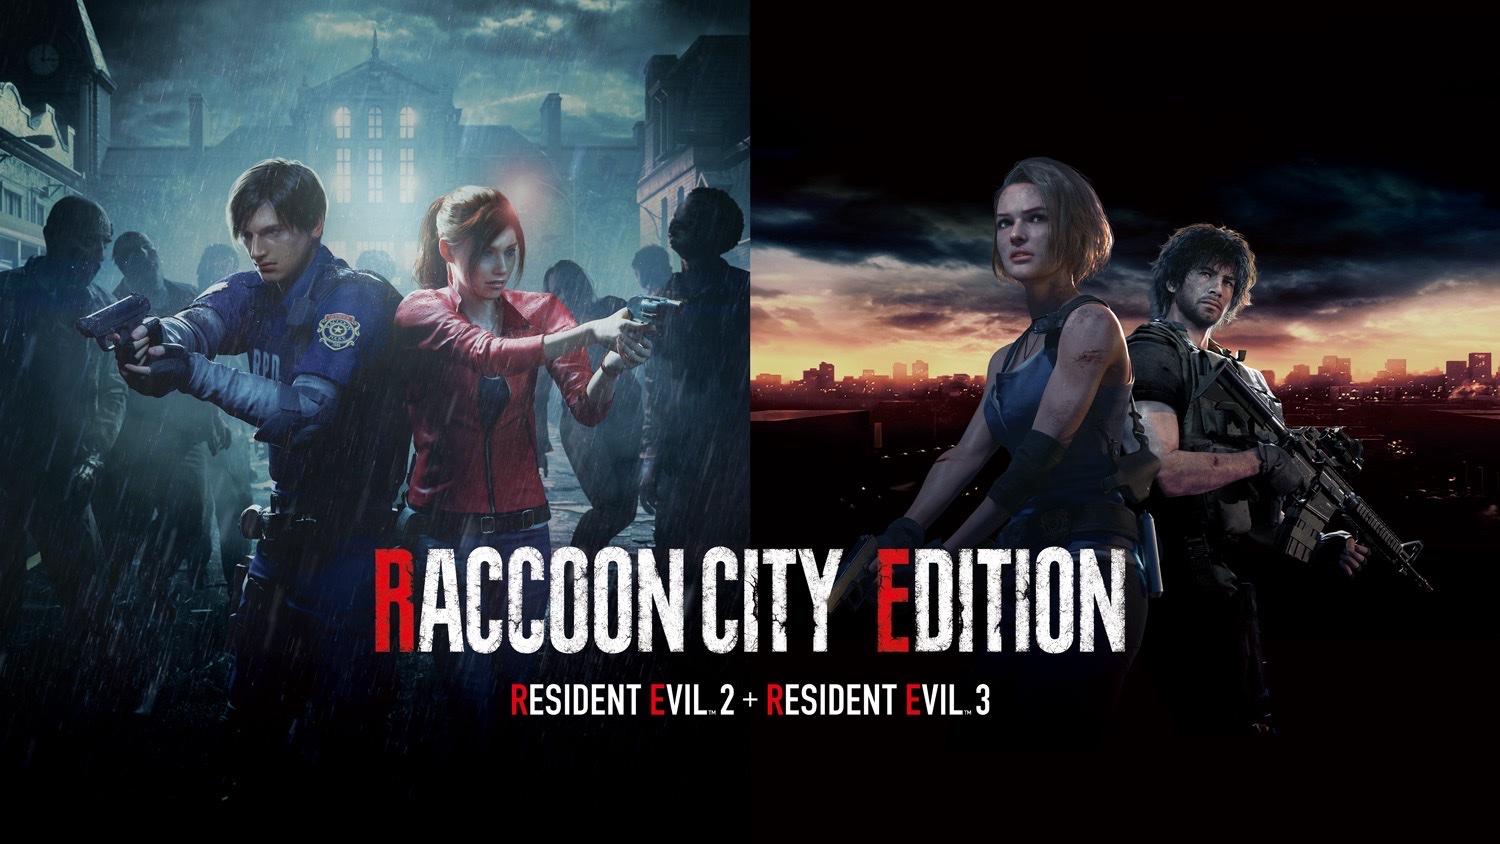 Resident evil 3 ps4. Resident Evil Raccoon City Edition ps4. Ракун Сити резидент 2. Resident Evil 2 Remake Xbox. Raccoon City Edition Xbox.